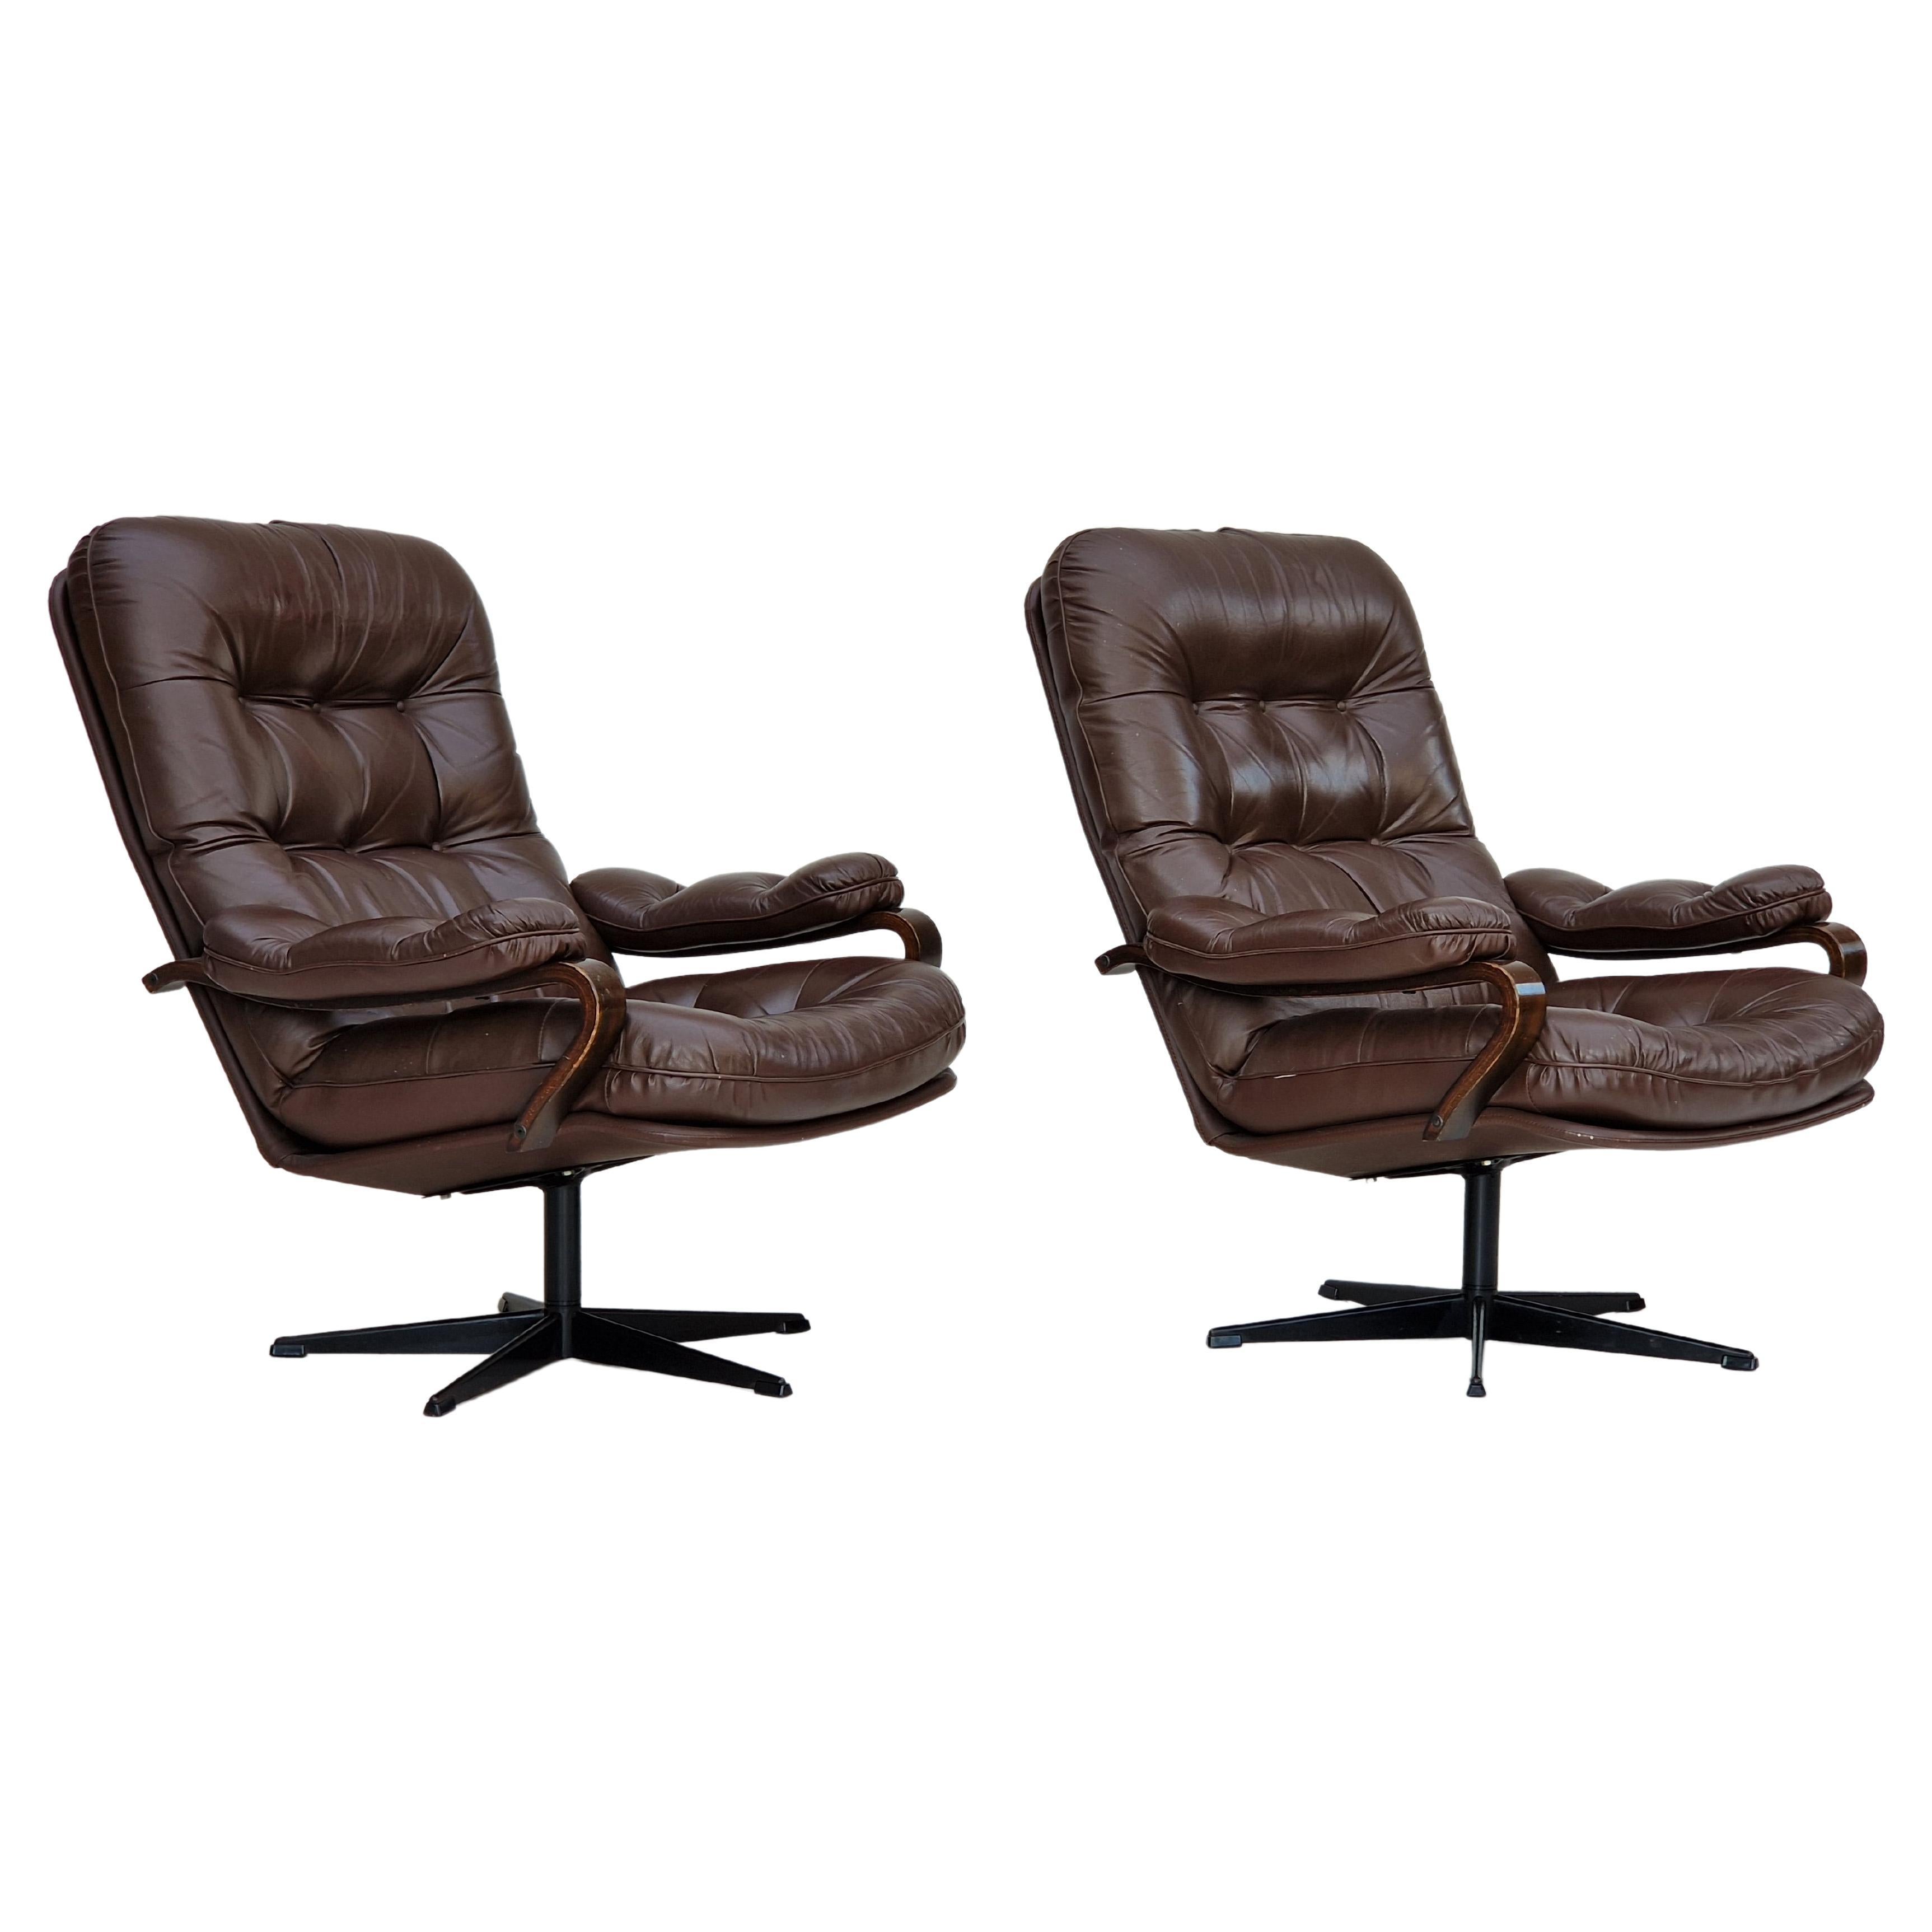 1970s, Vintage Danish, pair of swivel leather armchairs, original condition.